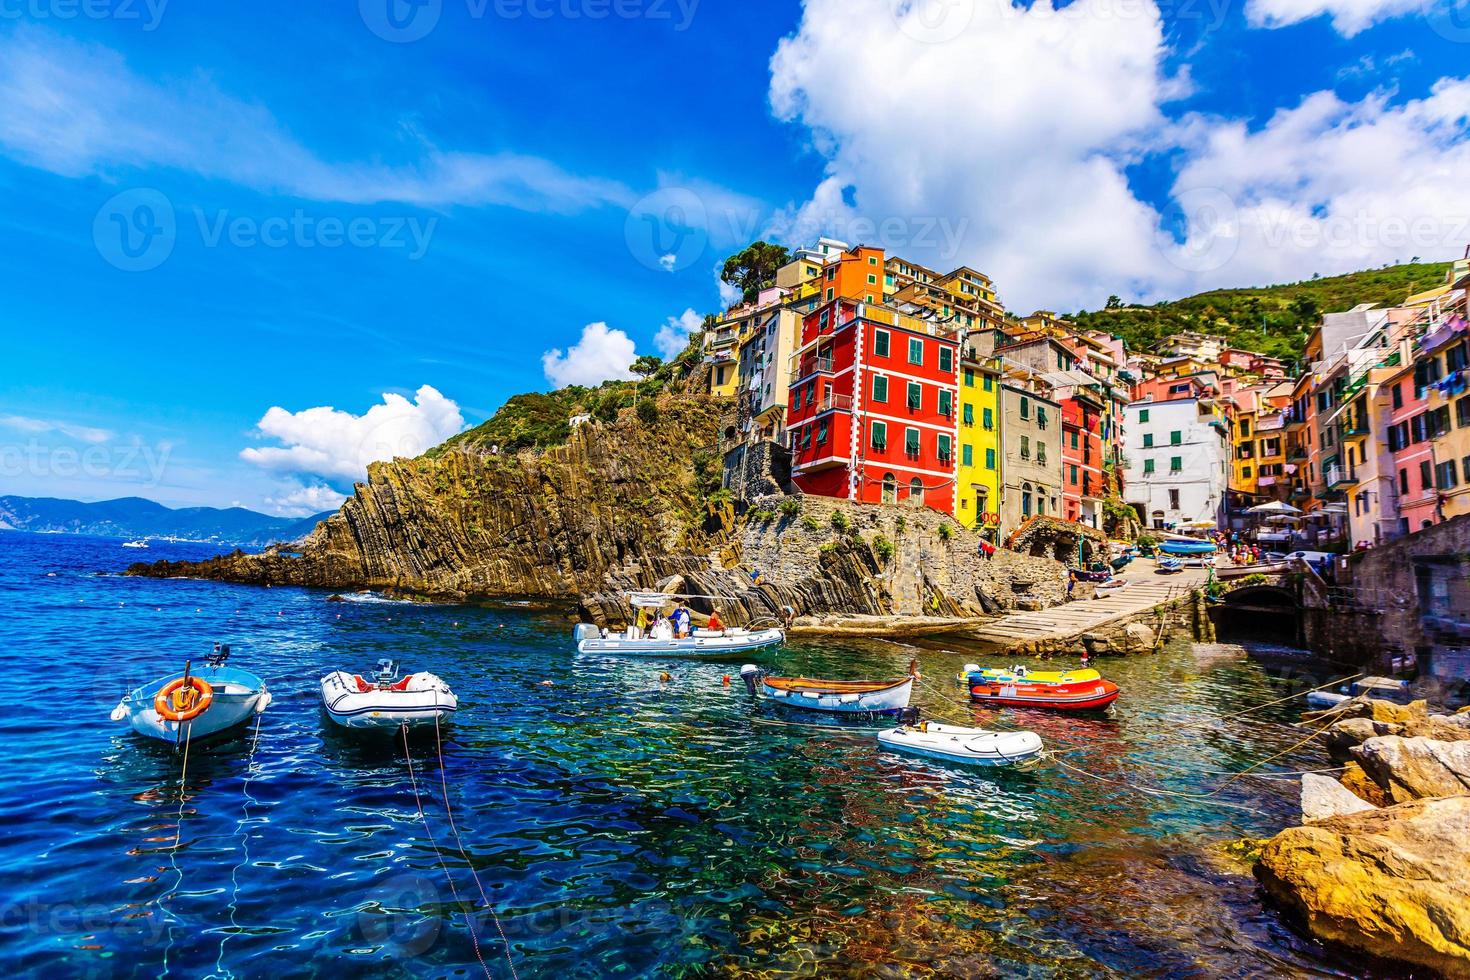 view of the colorful houses along the coastline of Cinque Terre area in Riomaggiore, Italy photo